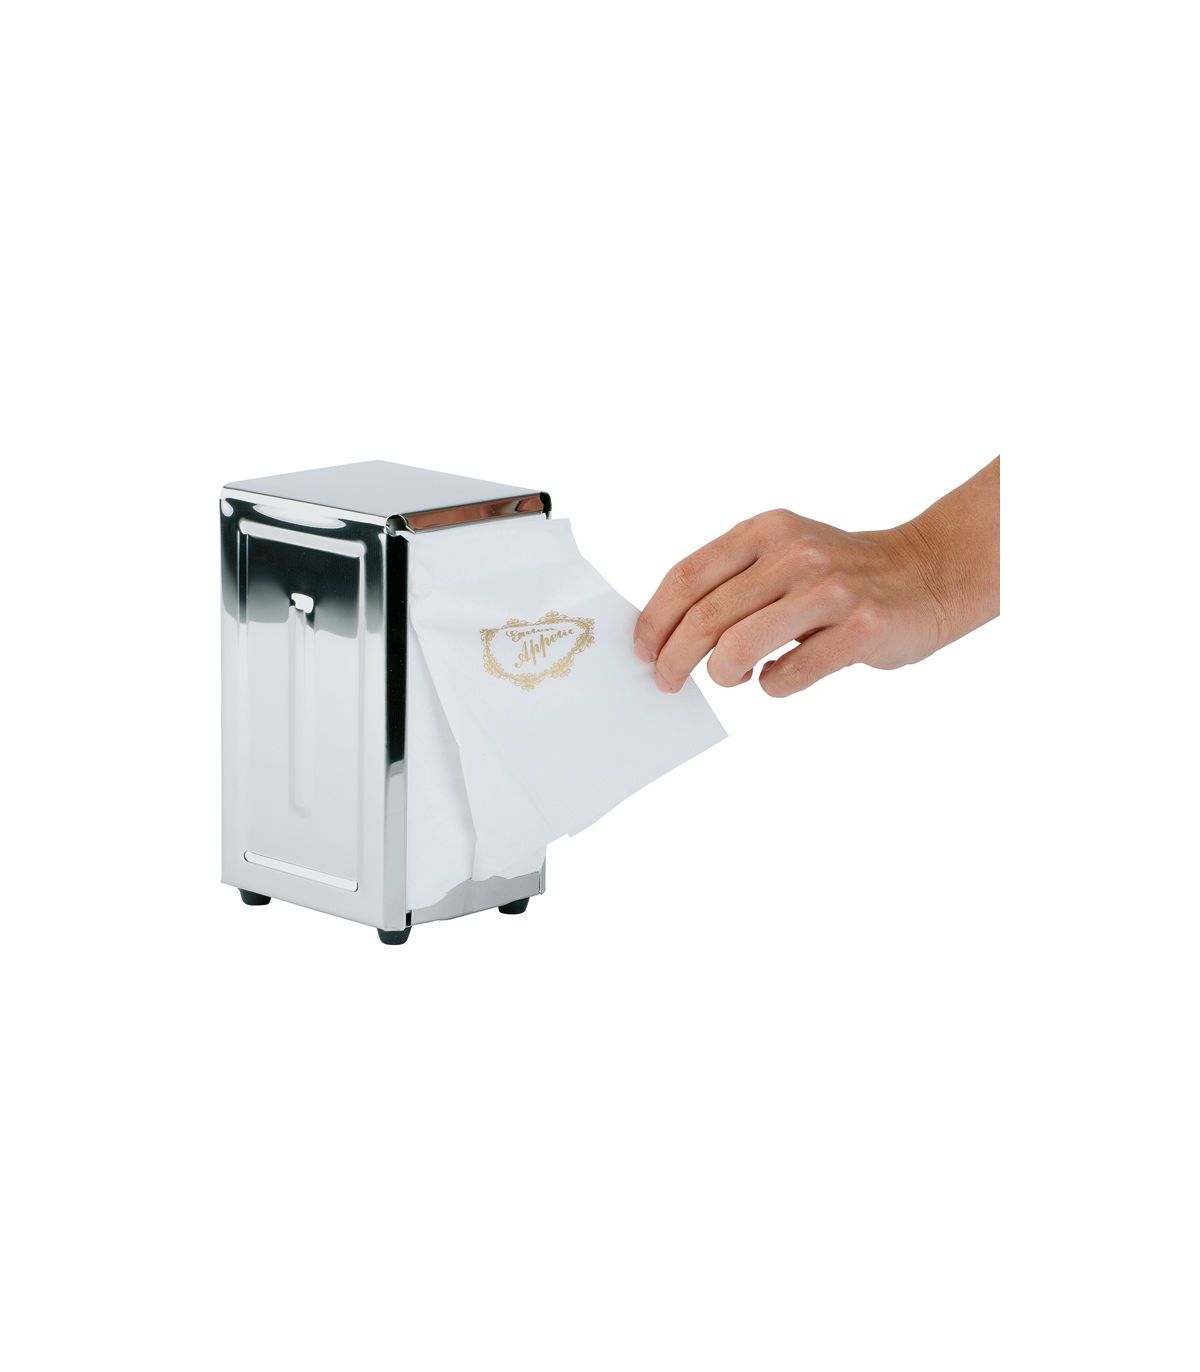 Gaoominy 1Pcs Napkin Dispenser Practical Stainless Steel Countertop Napkin Holder Stand Paper Towel Holder For Home Hotel Restaurant 